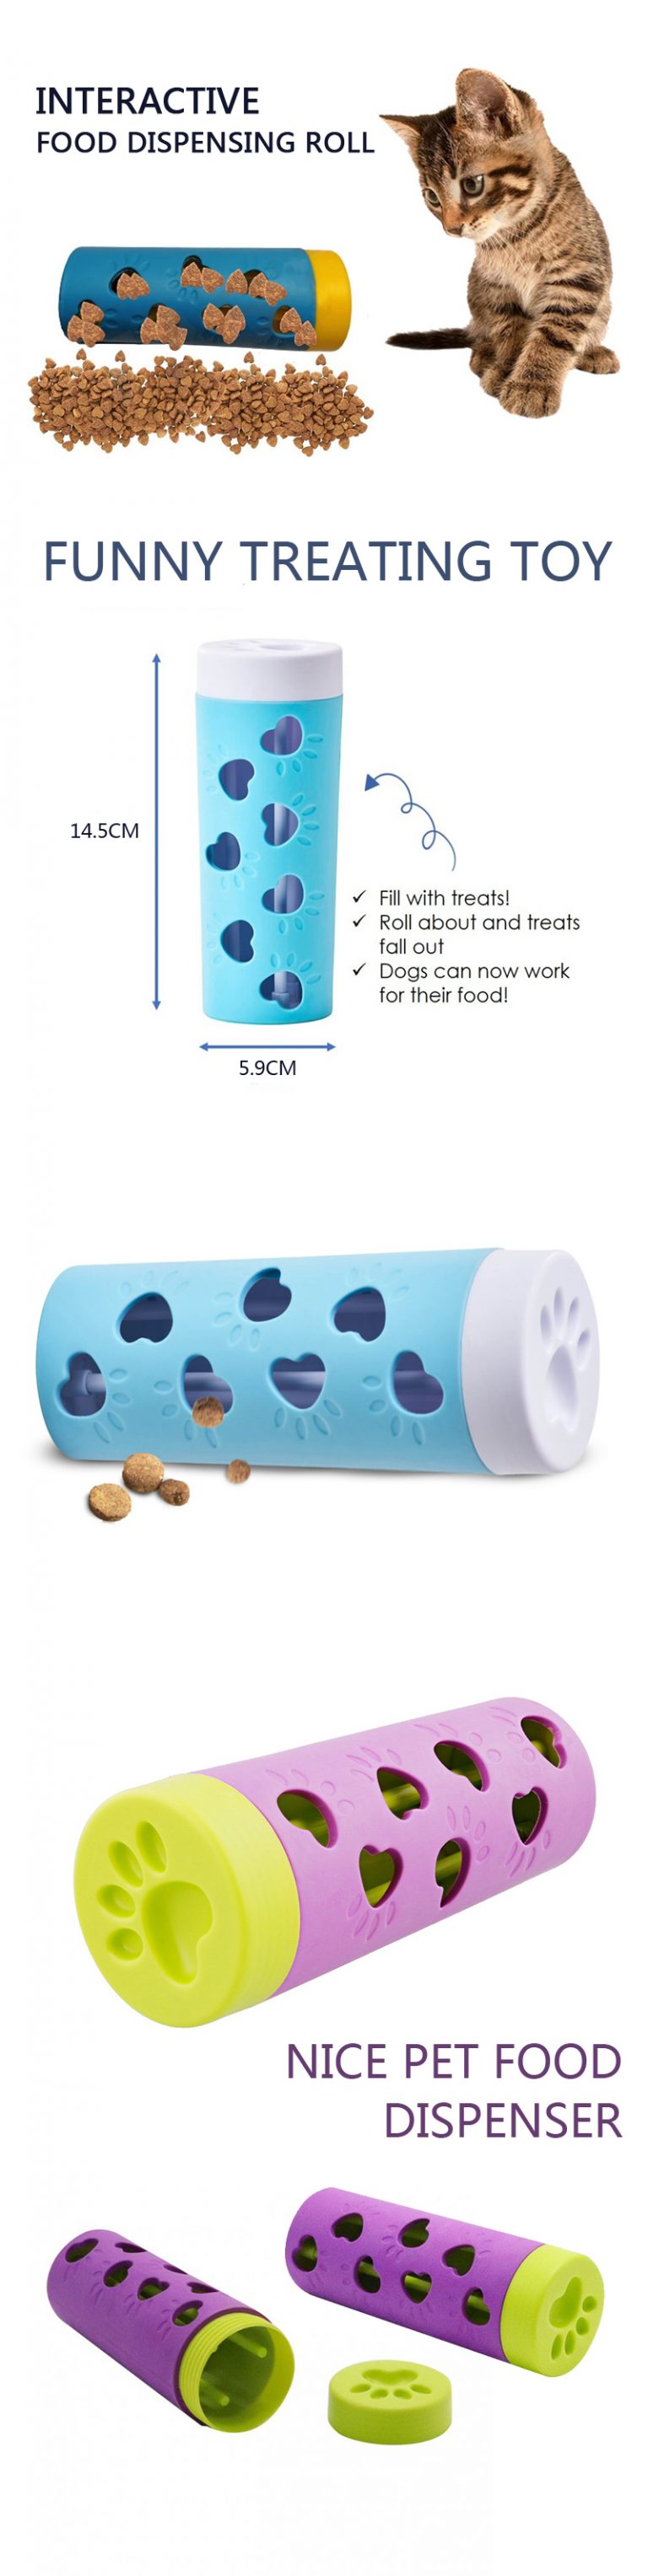 Interactive Food Dispensing Roll 